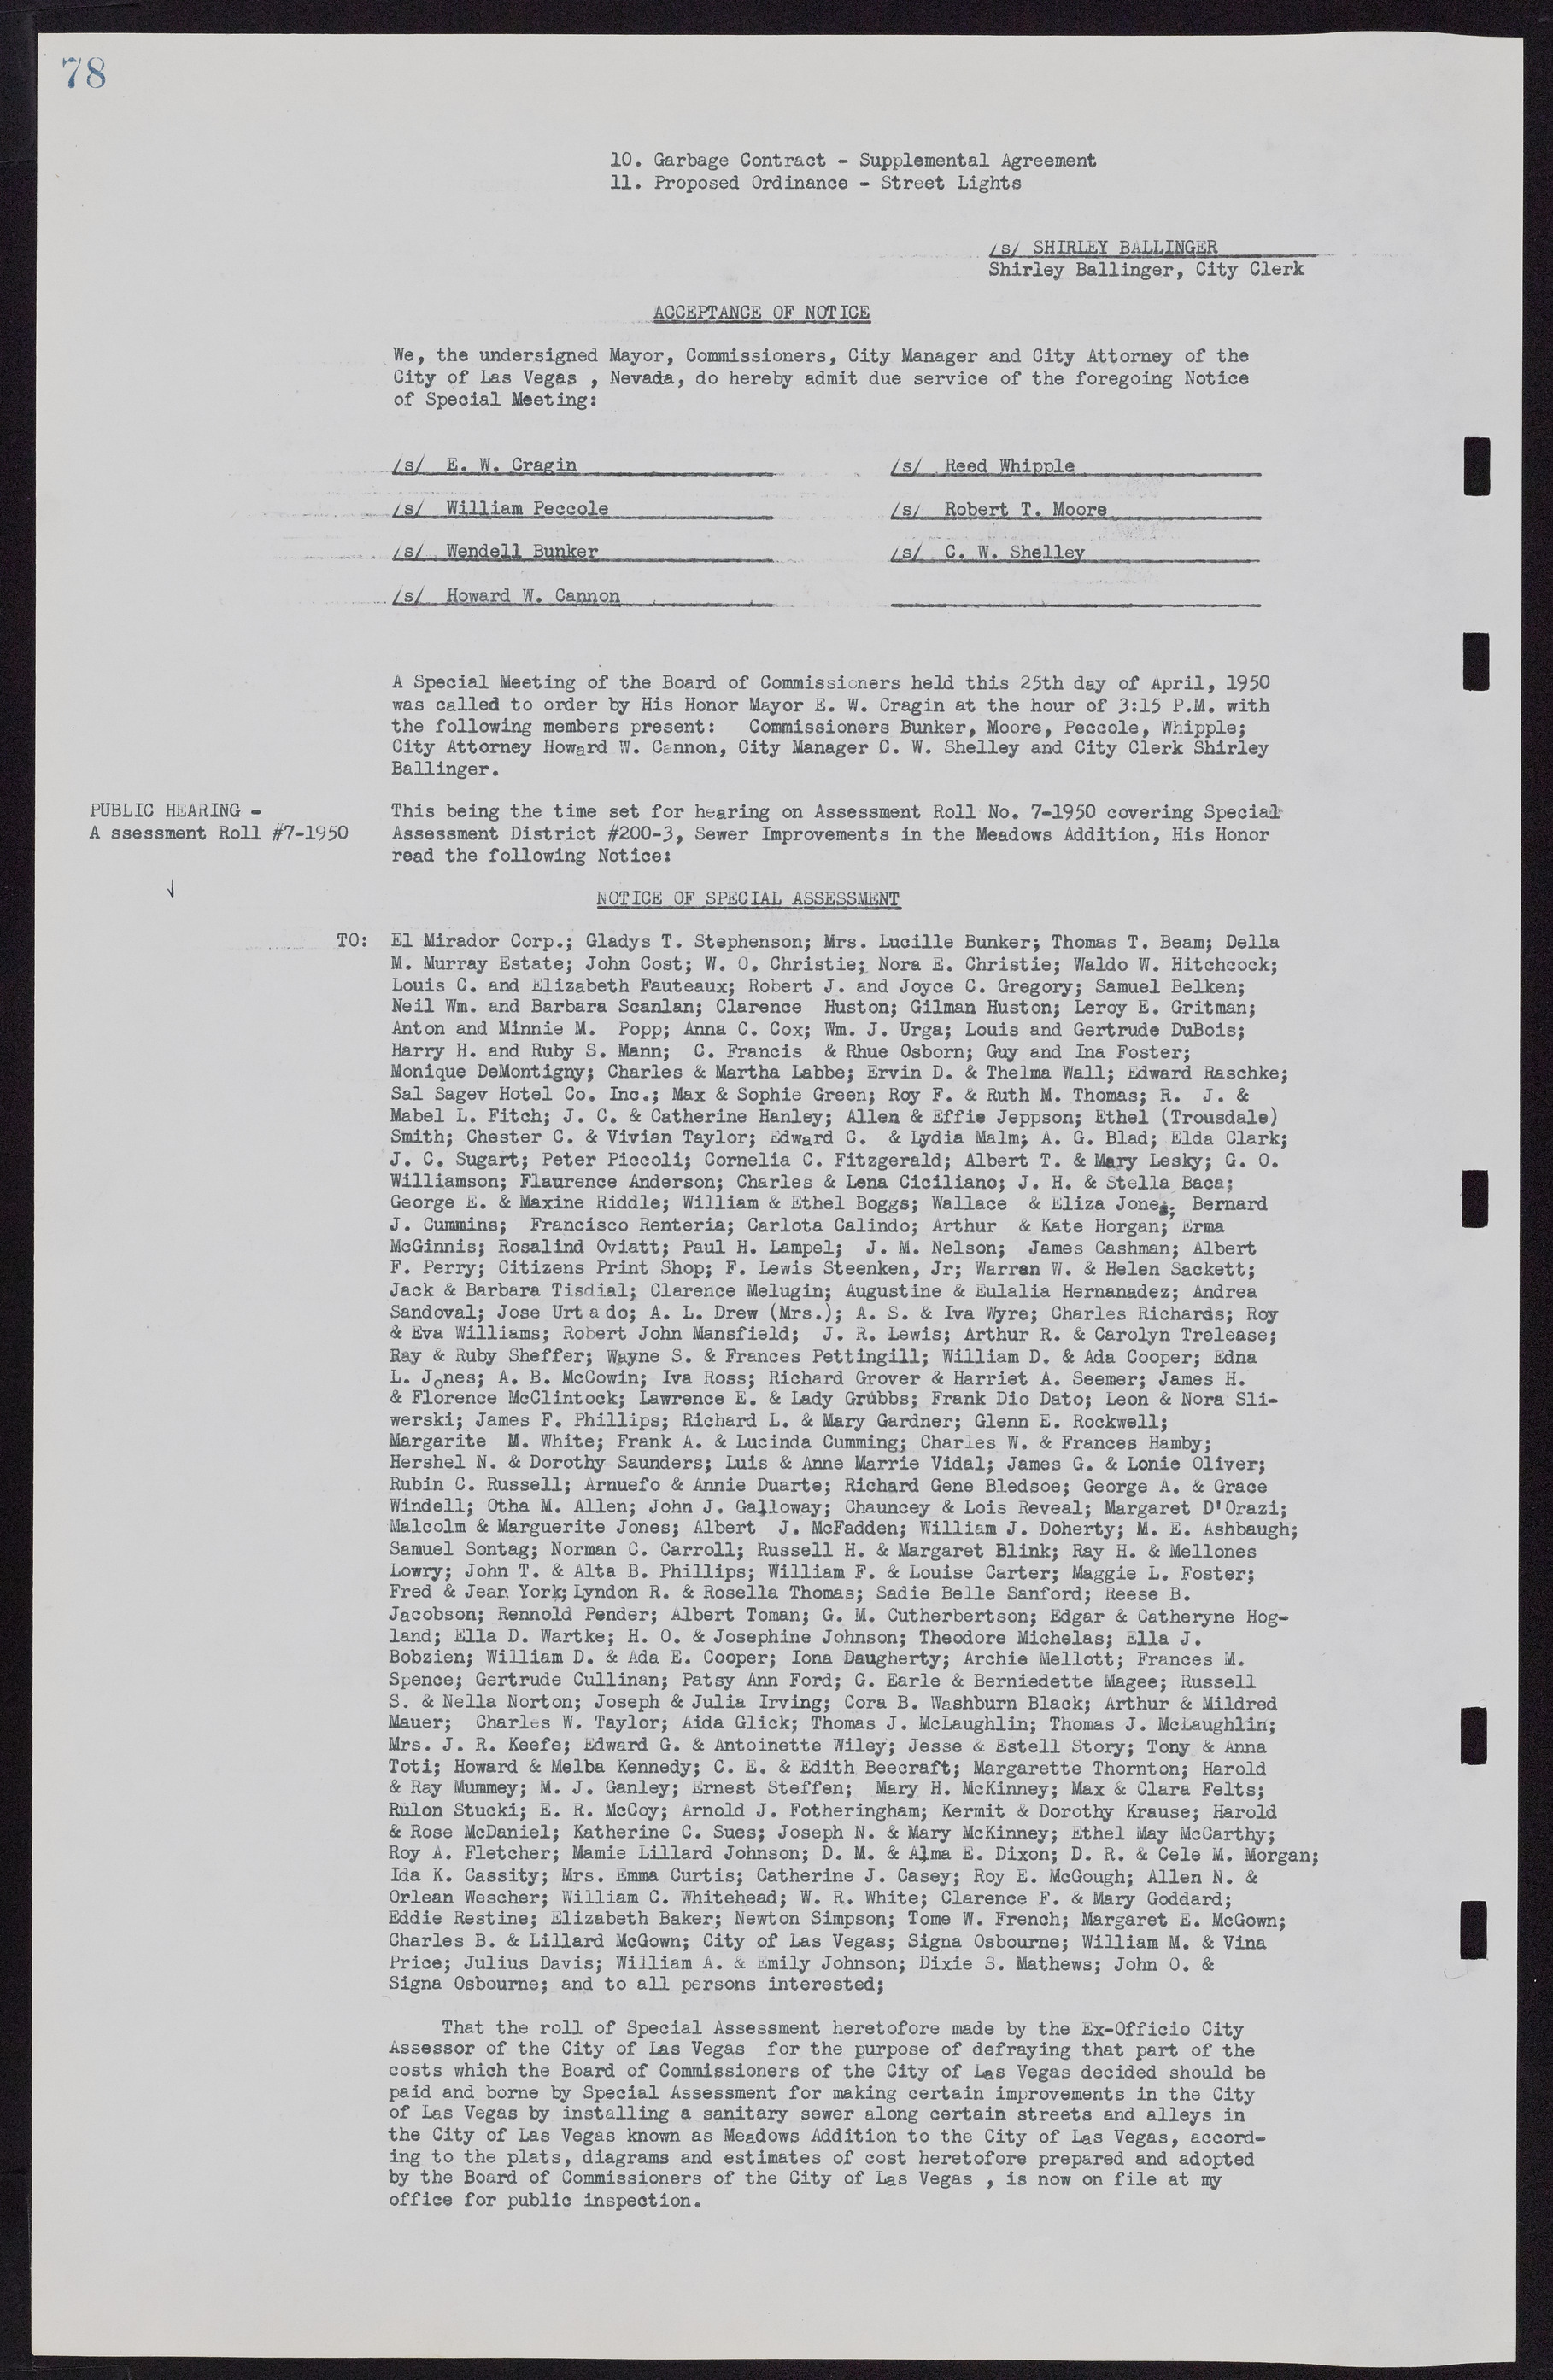 Las Vegas City Commission Minutes, November 7, 1949 to May 21, 1952, lvc000007-86